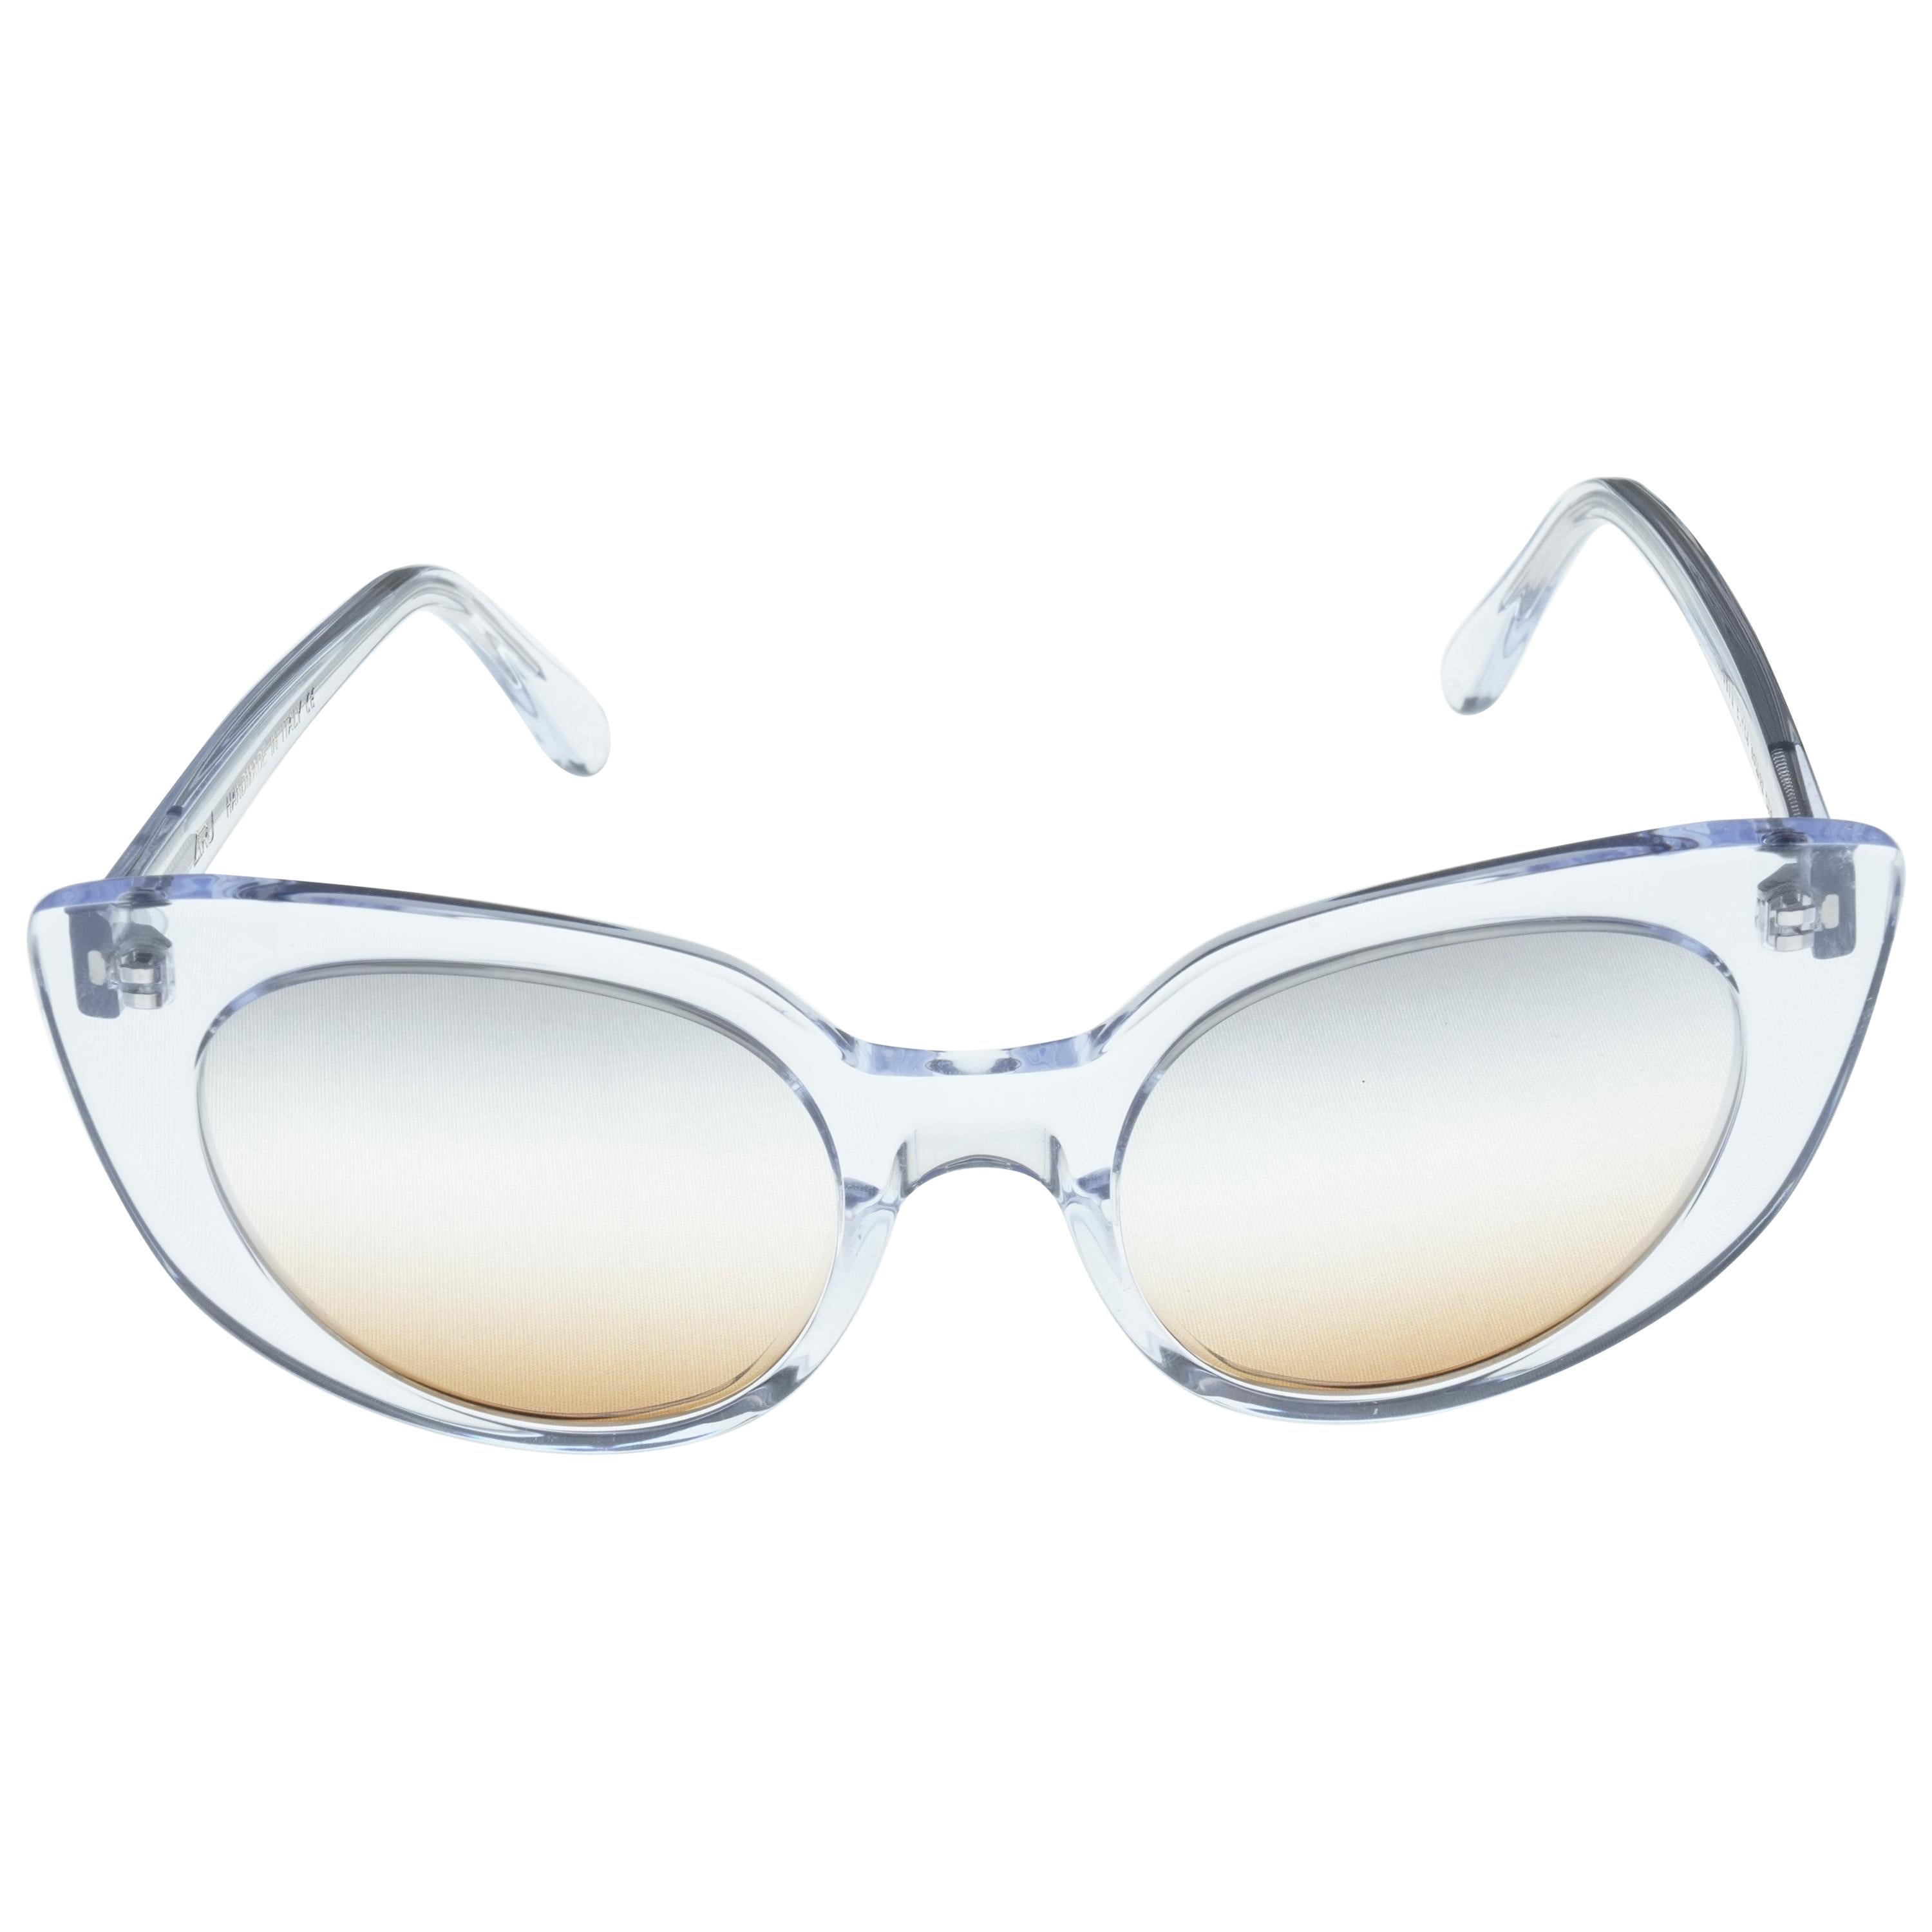 Aru Eyewear Sunglasses